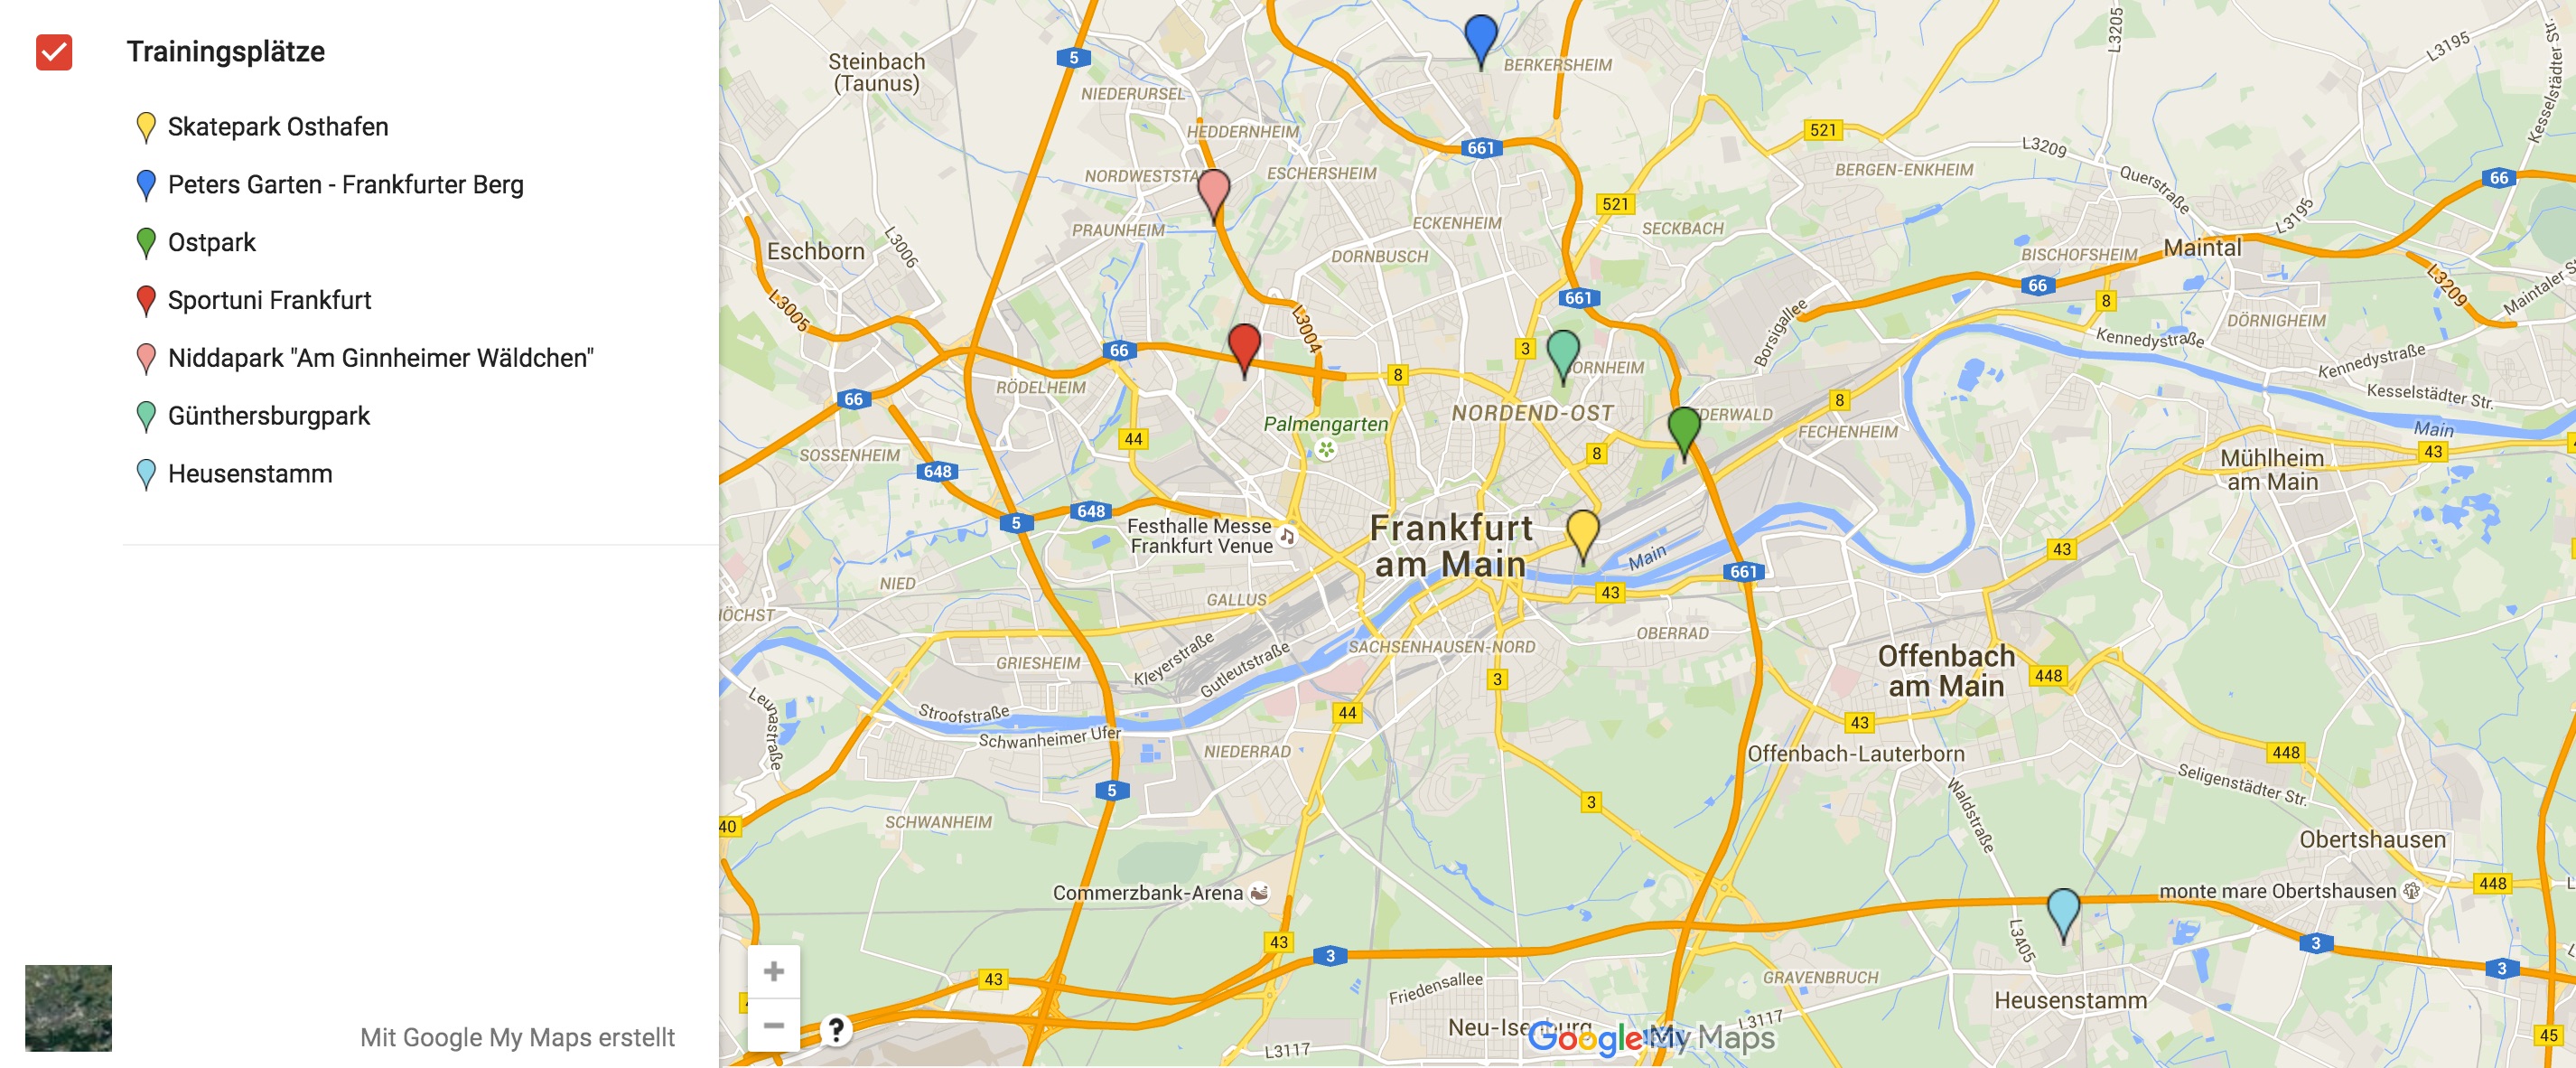 Freeletics_Trainingsplätze_Frankfurt_am_Main